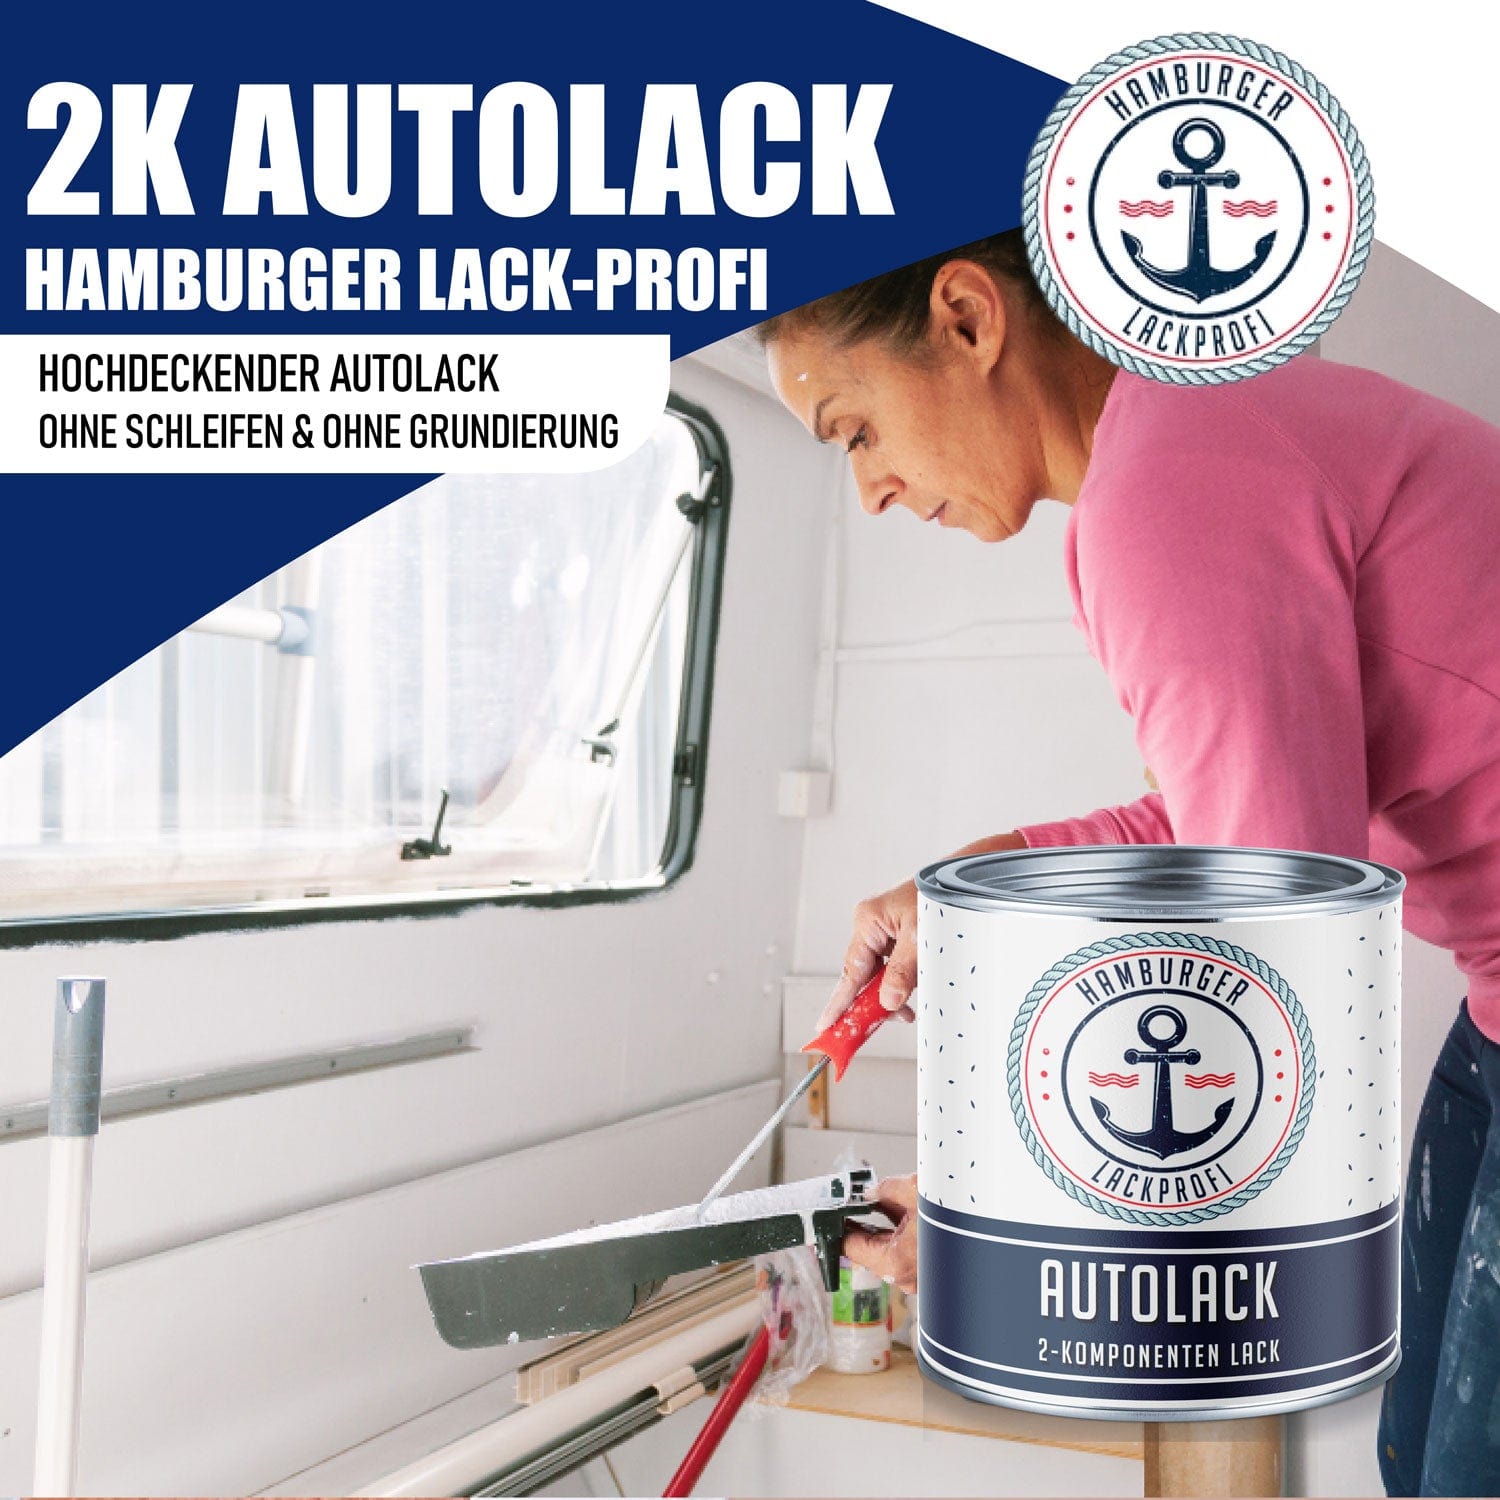 Hamburger Lack-Profi Lacke & Beschichtungen Hamburger Lack-Profi 2K Autolack in Silbergrau RAL 7001 mit Lackierset (X300) & Verdünnung (1 L) - 30% Sparangebot